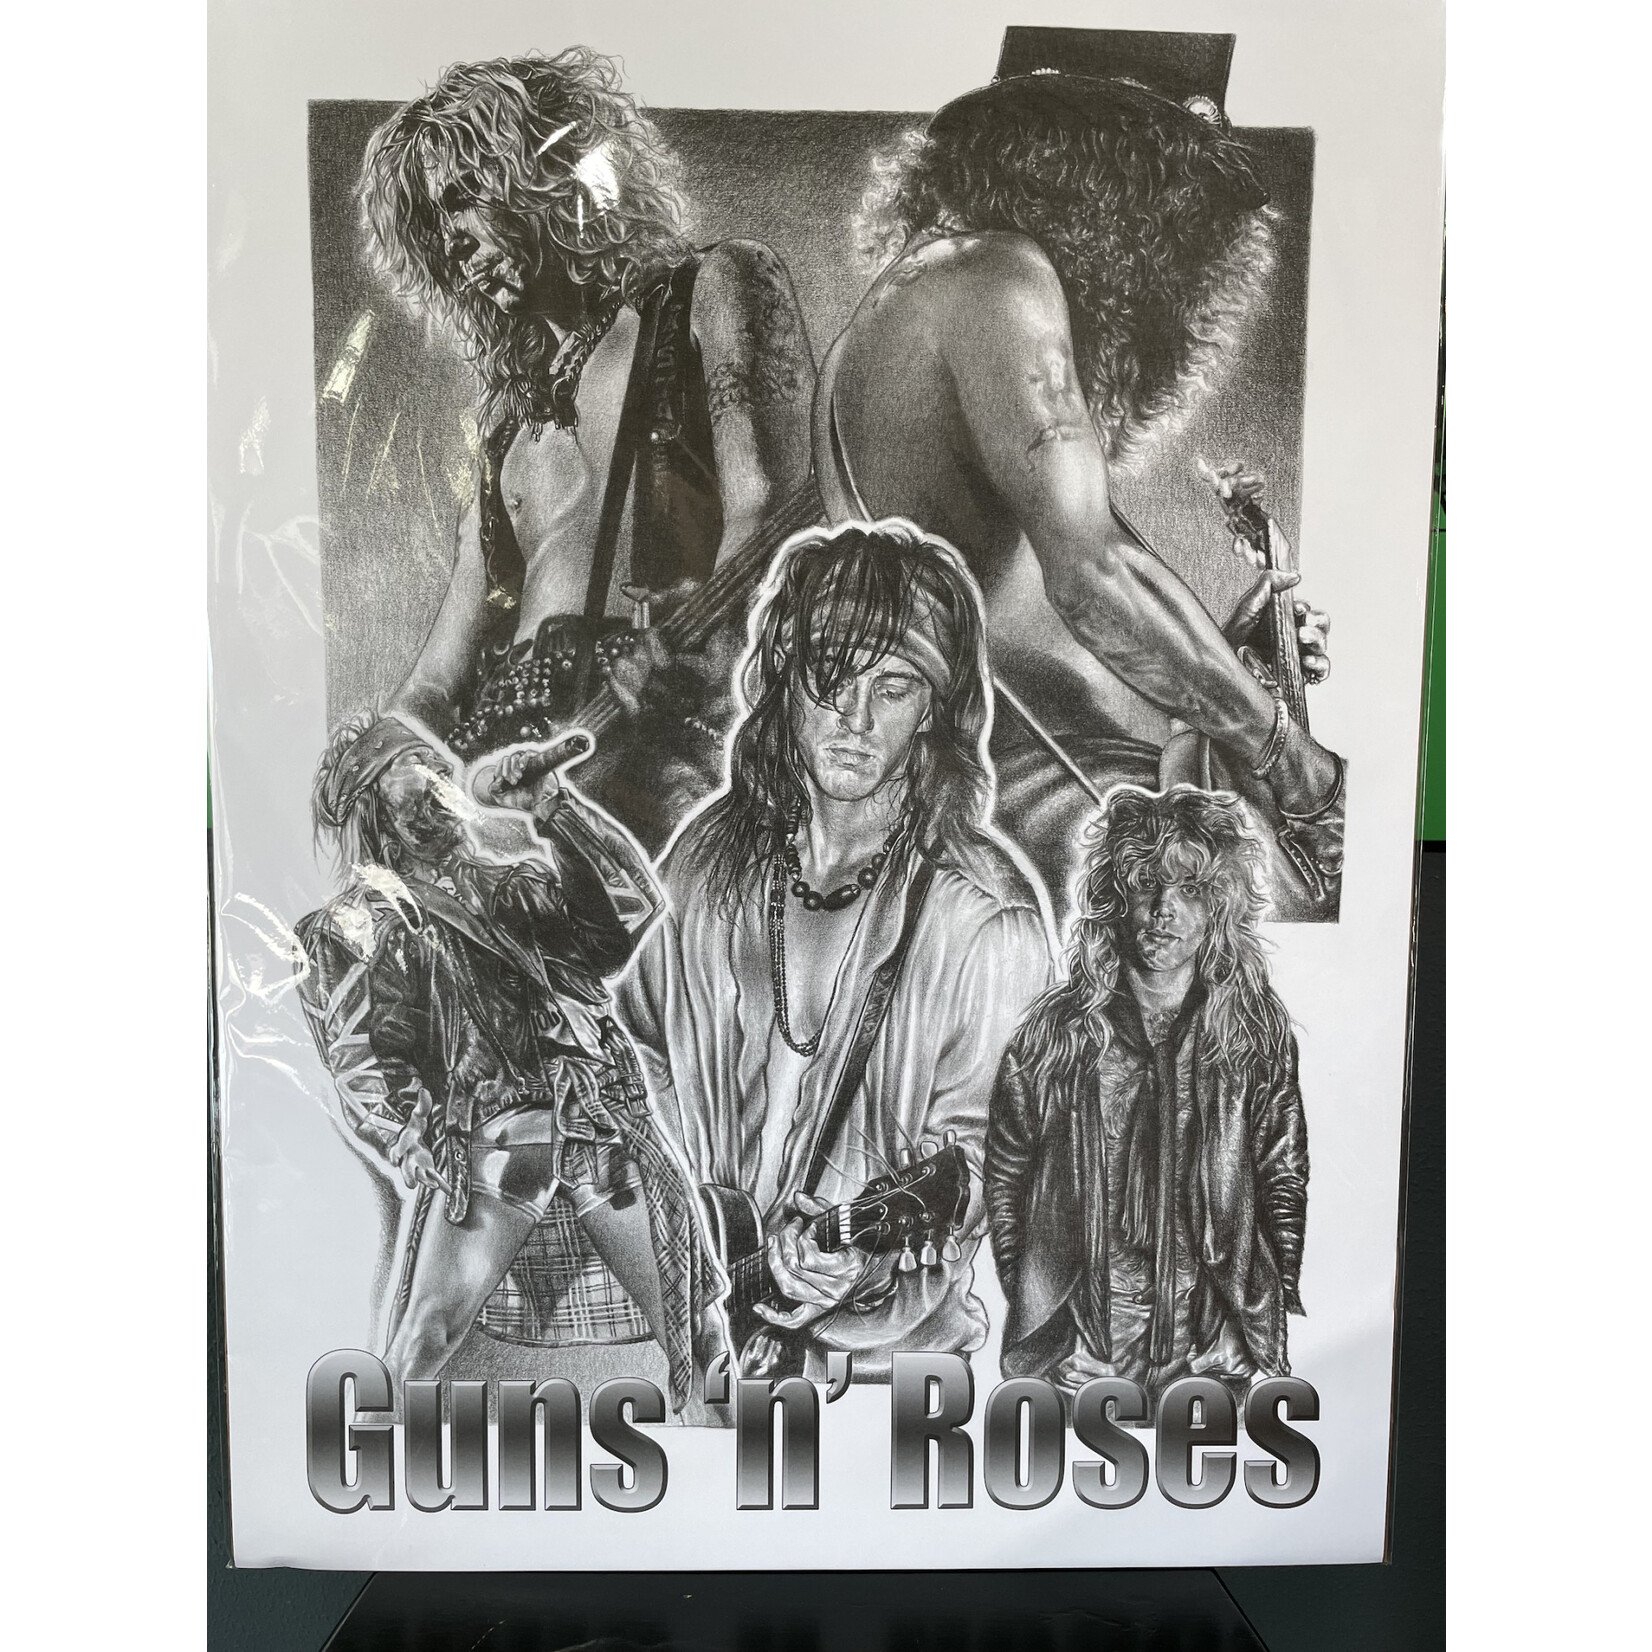 Rock Your Walls Off Guns N' Roses (Poster) [18"x24"]